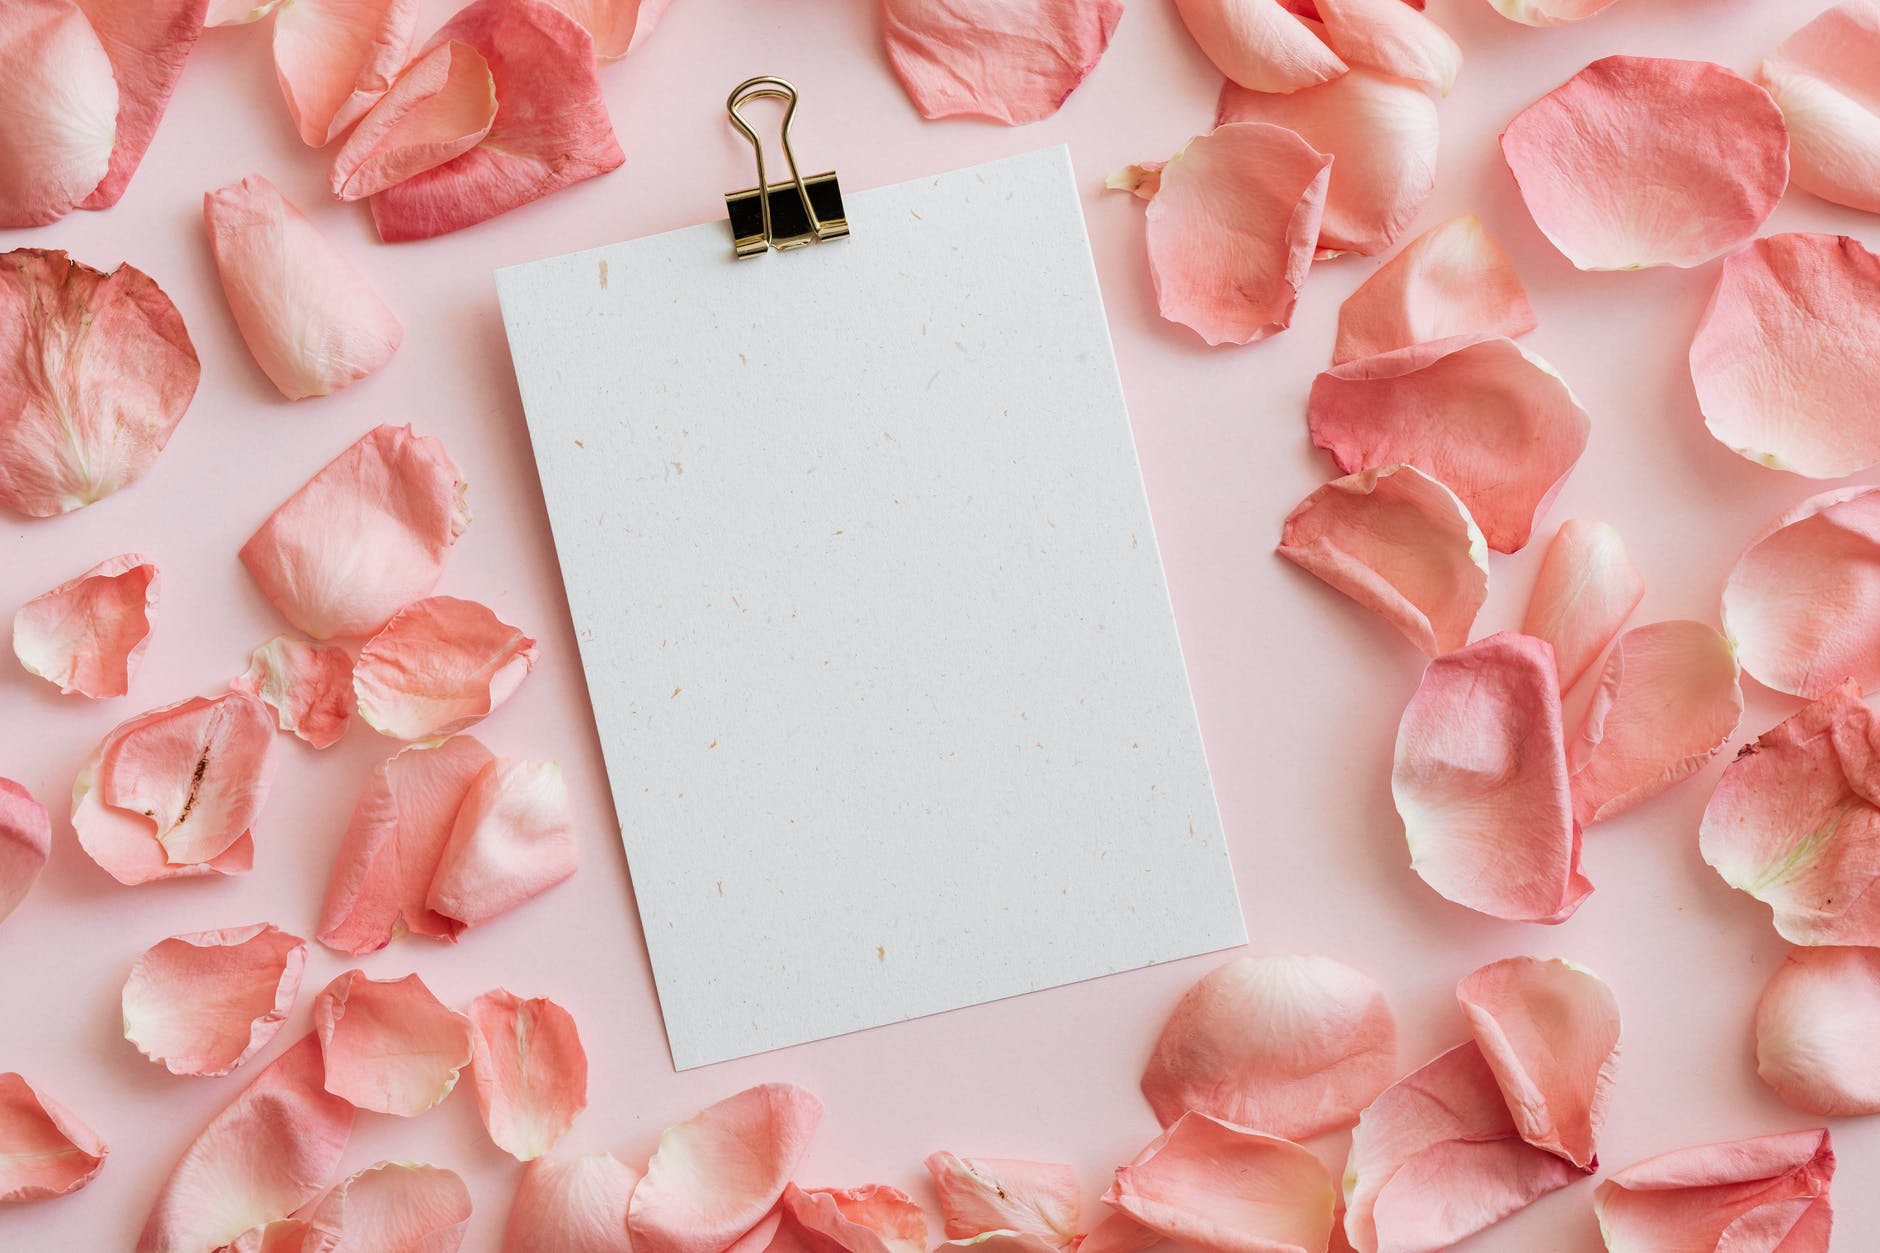 blank paper sheet among pink petals